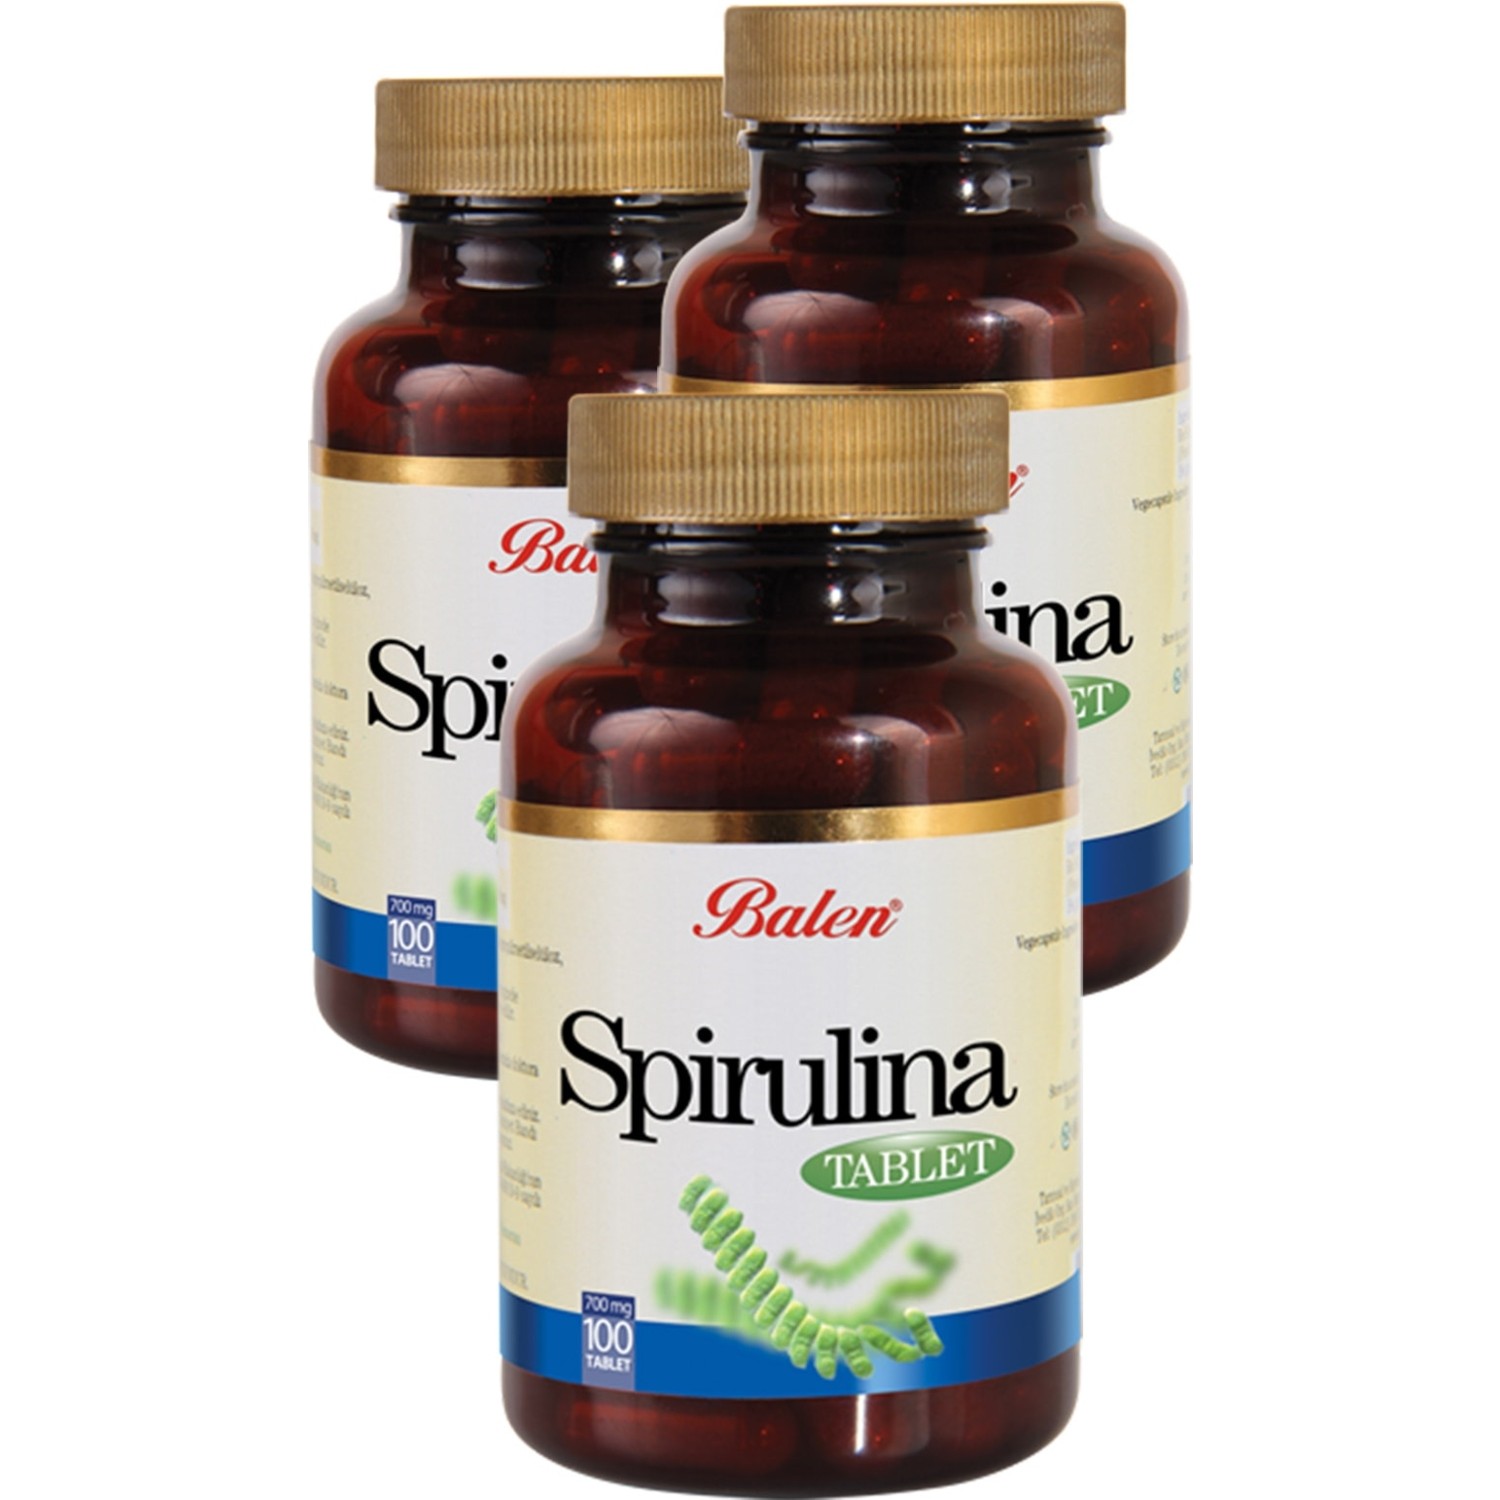 Пищевая добавка Balen Spirulina 740 мг, 3 упаковки по 100 таблеток пищевая добавка balen spirulina 740 мг 100 таблеток